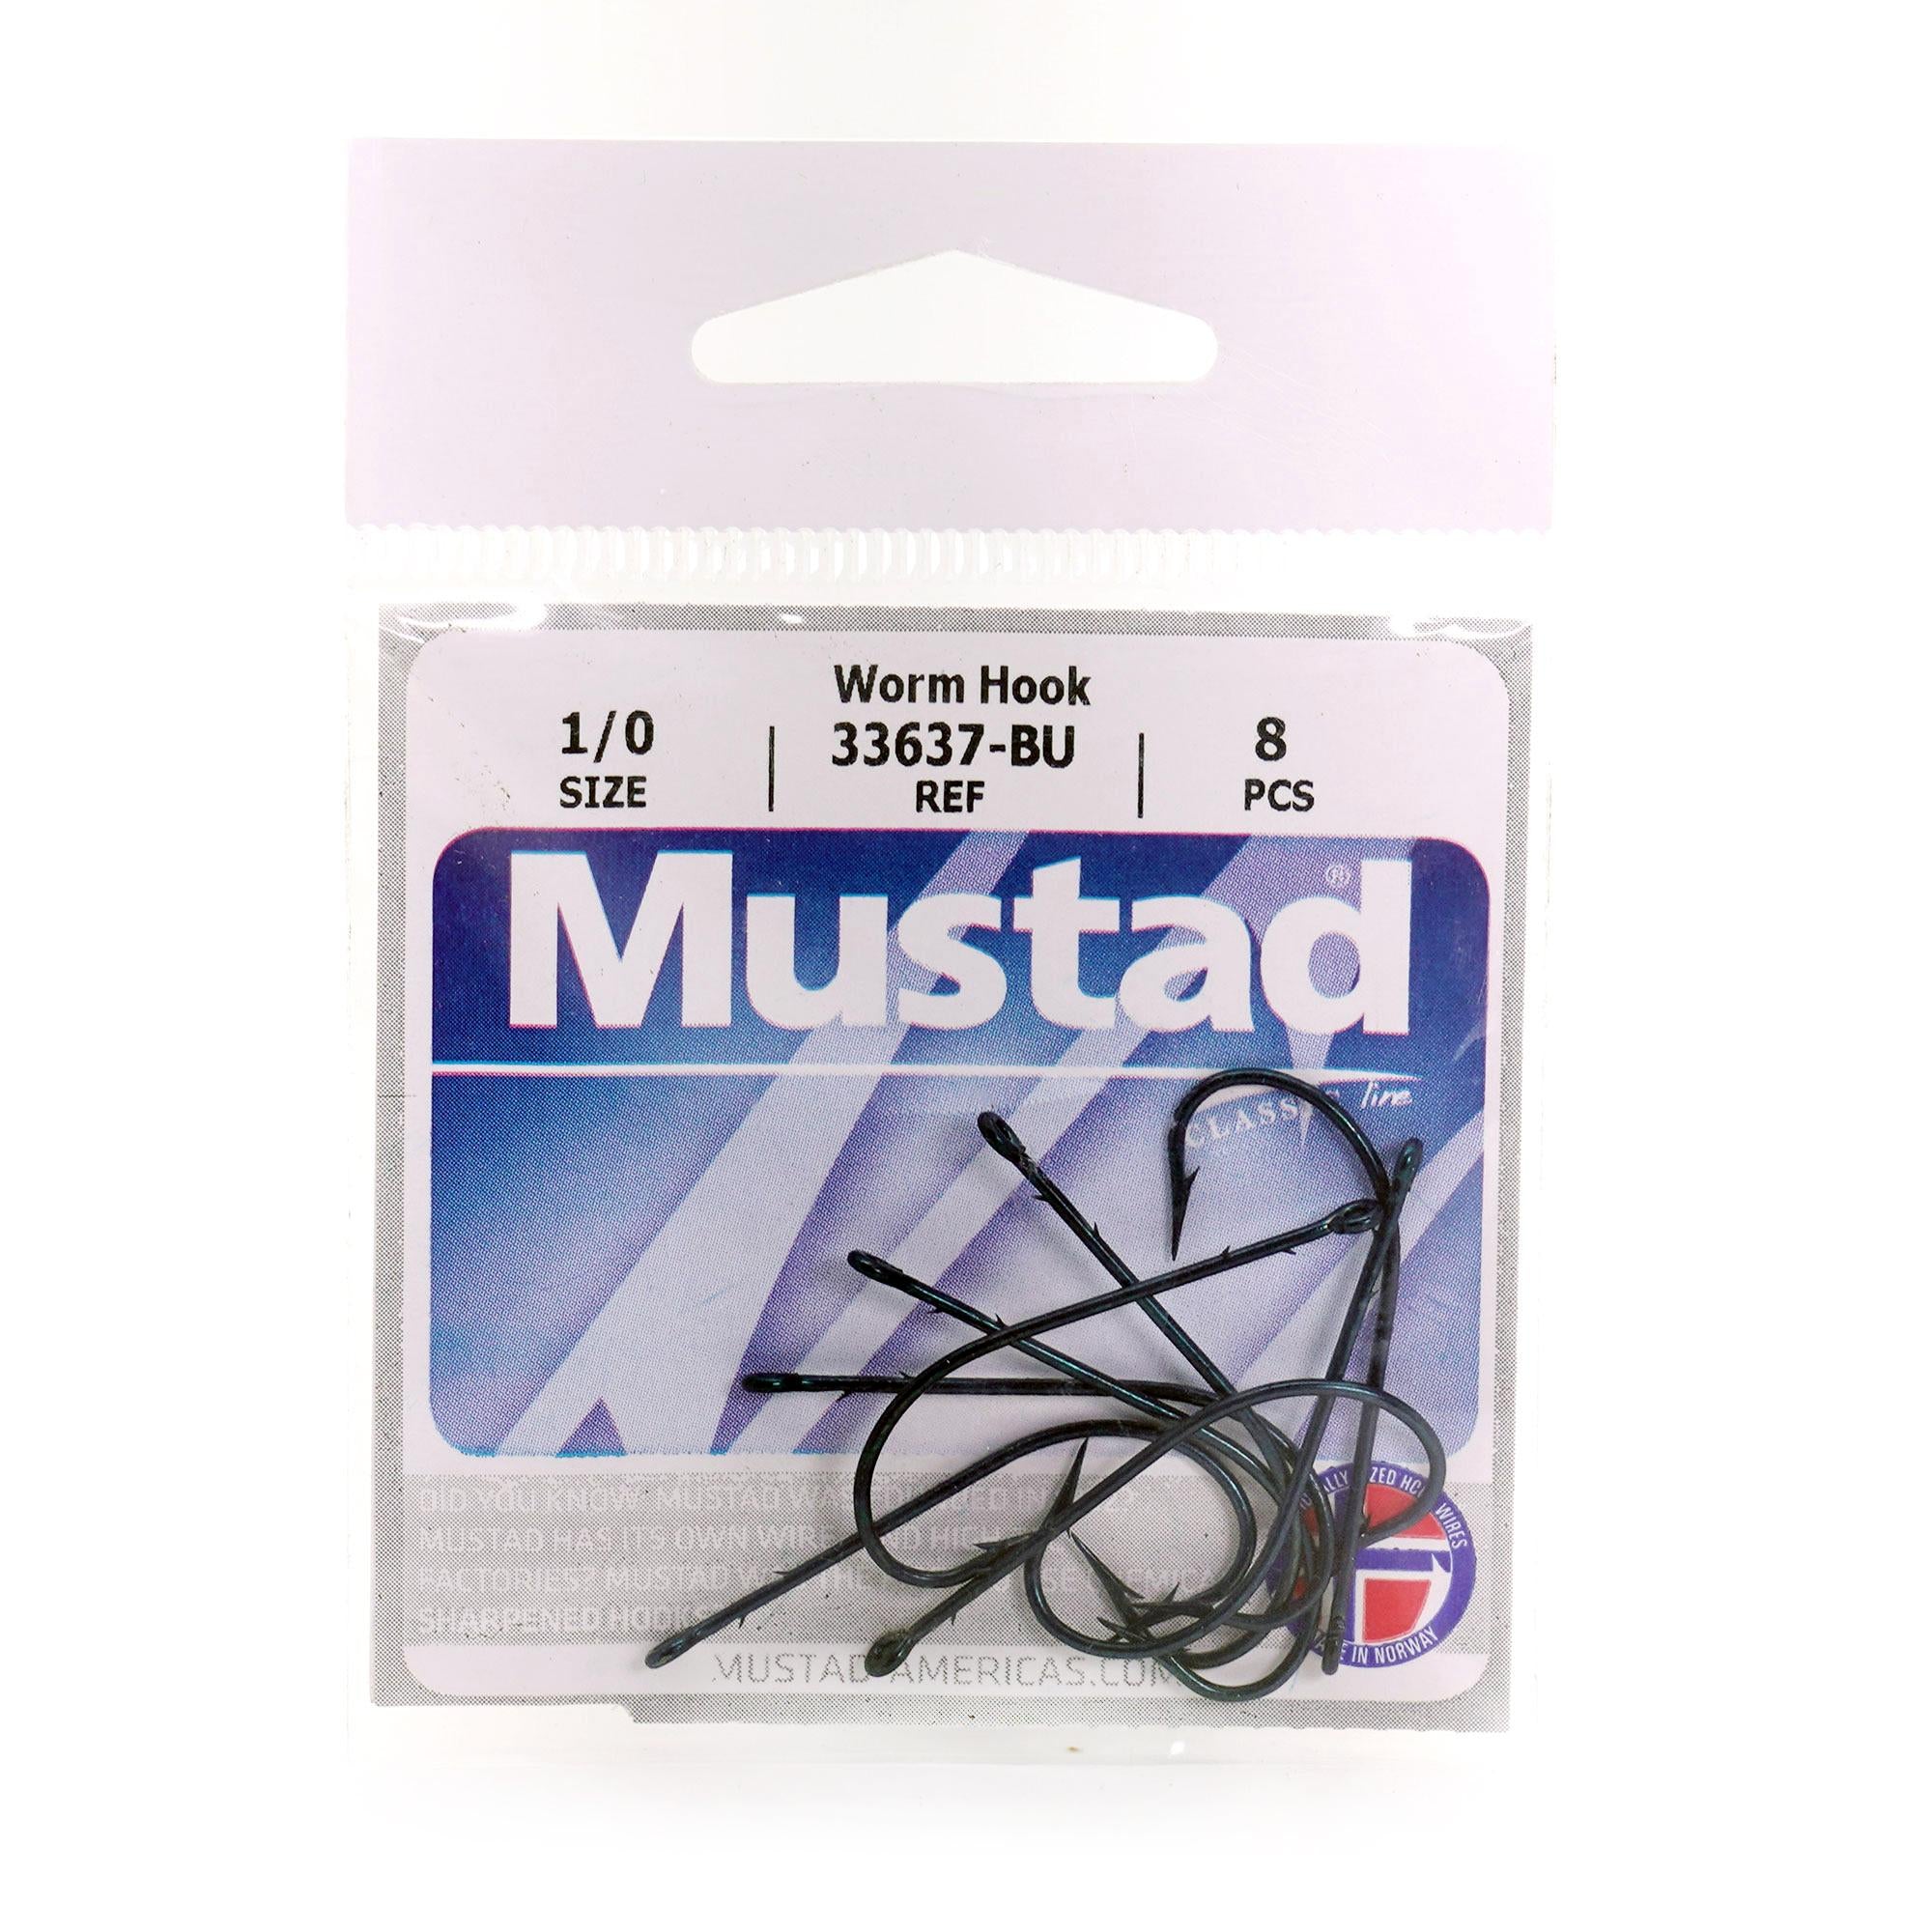 Mustad Fine Worm Size 8 - 32813npblm - Bulk 3 Pack - Chemically Sharpened  Hooks